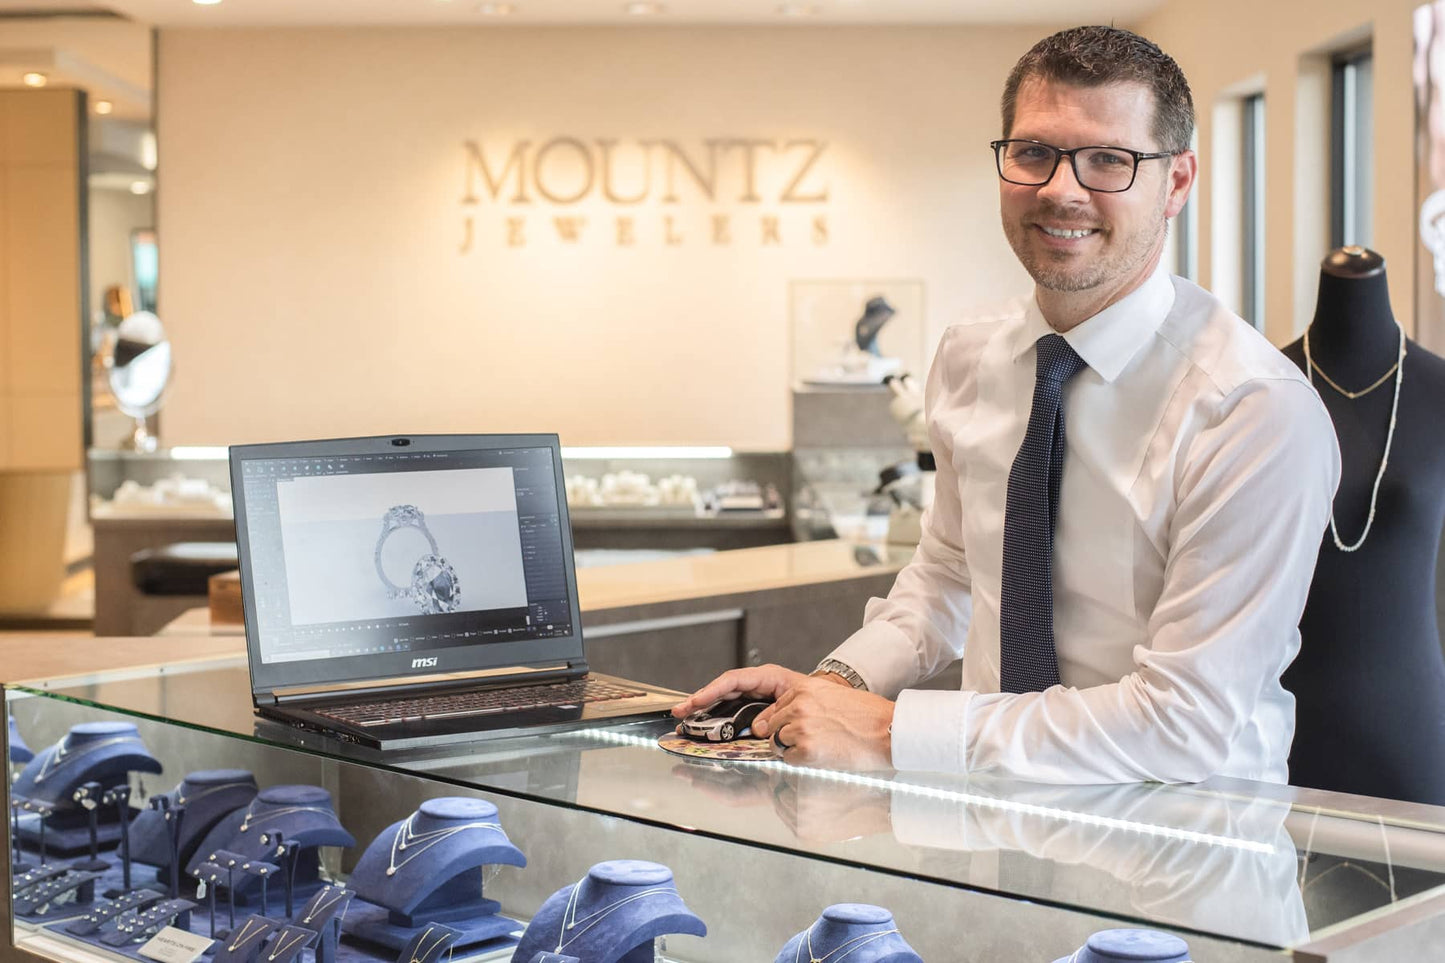 Jake at Mountz Jewelers shows off a custom design CAD image